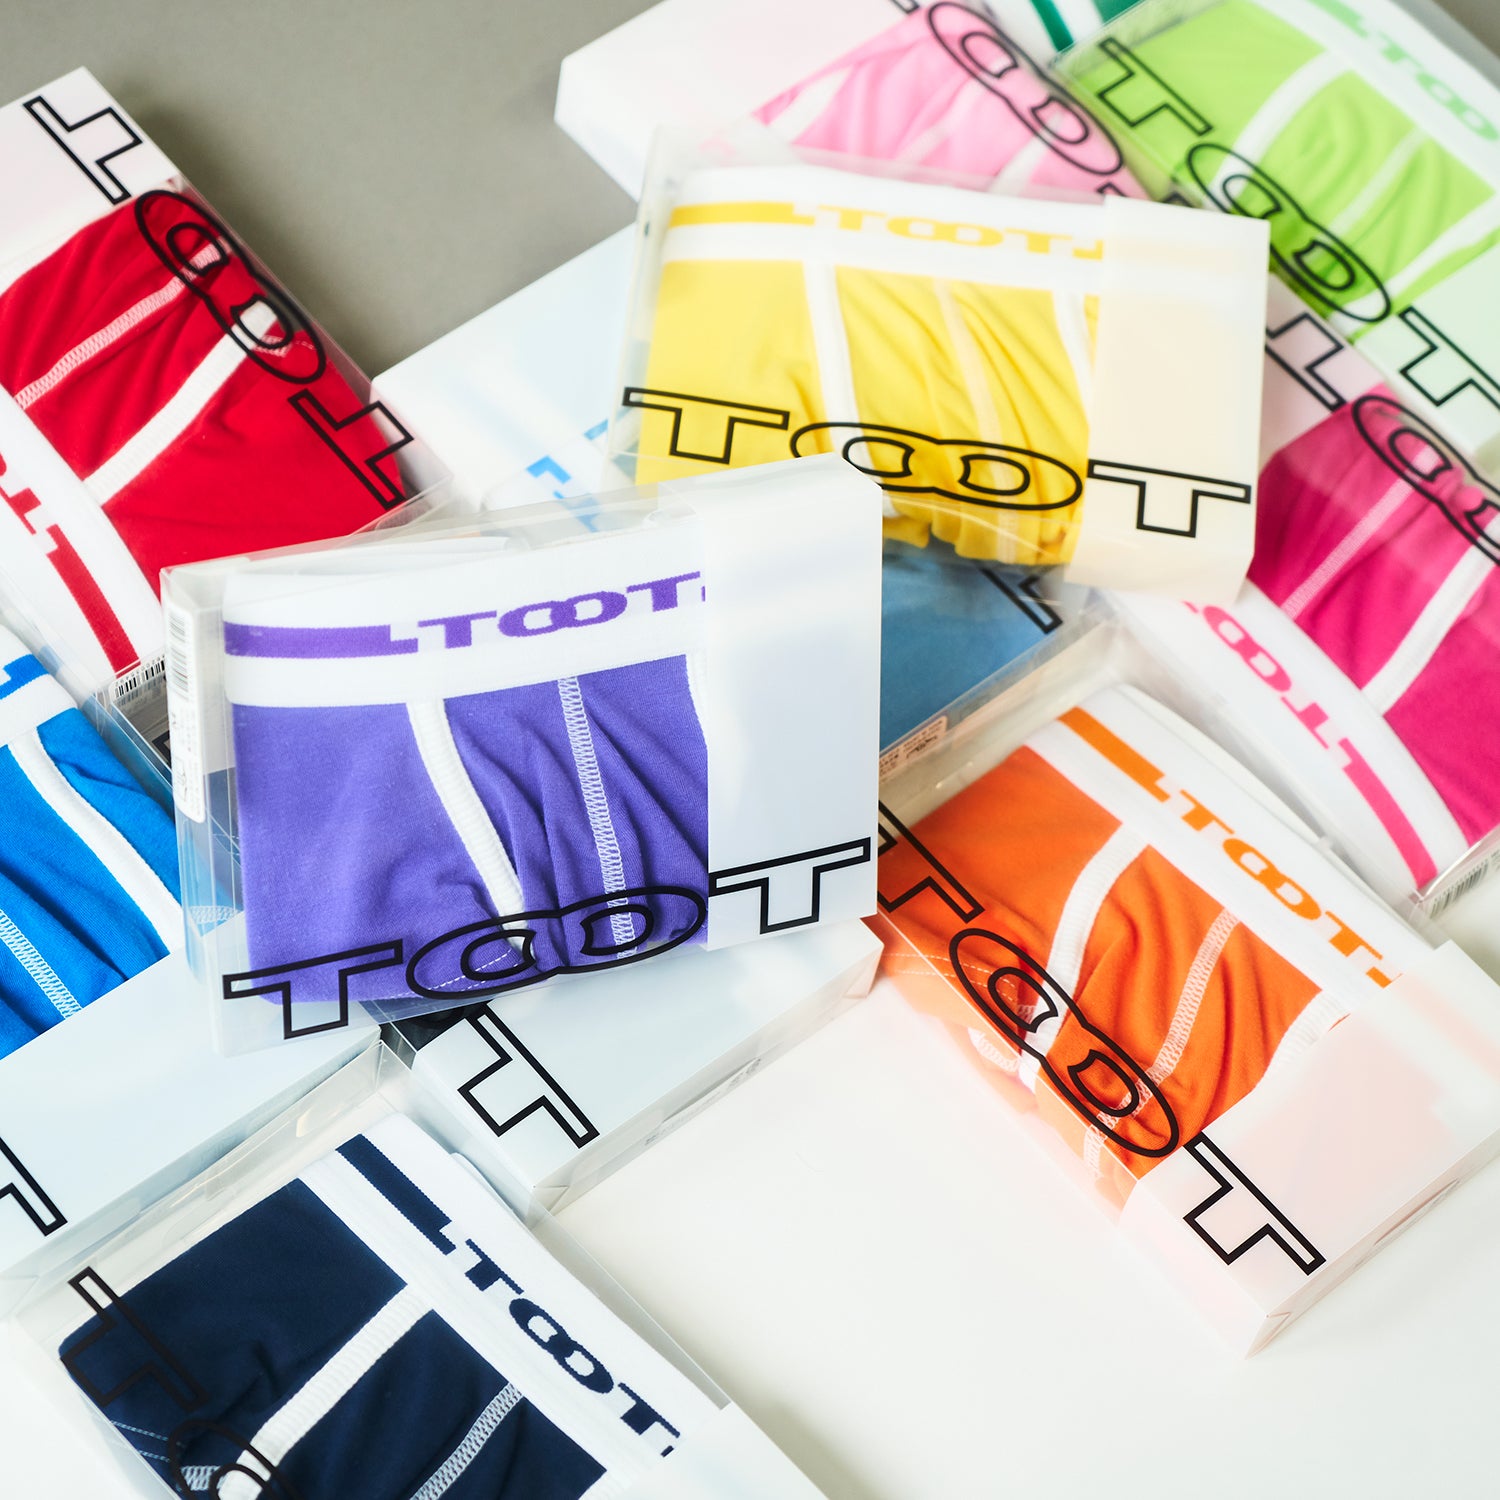 Japanese Men's Underwear Toot Unveils New Prints for Spring/Summer